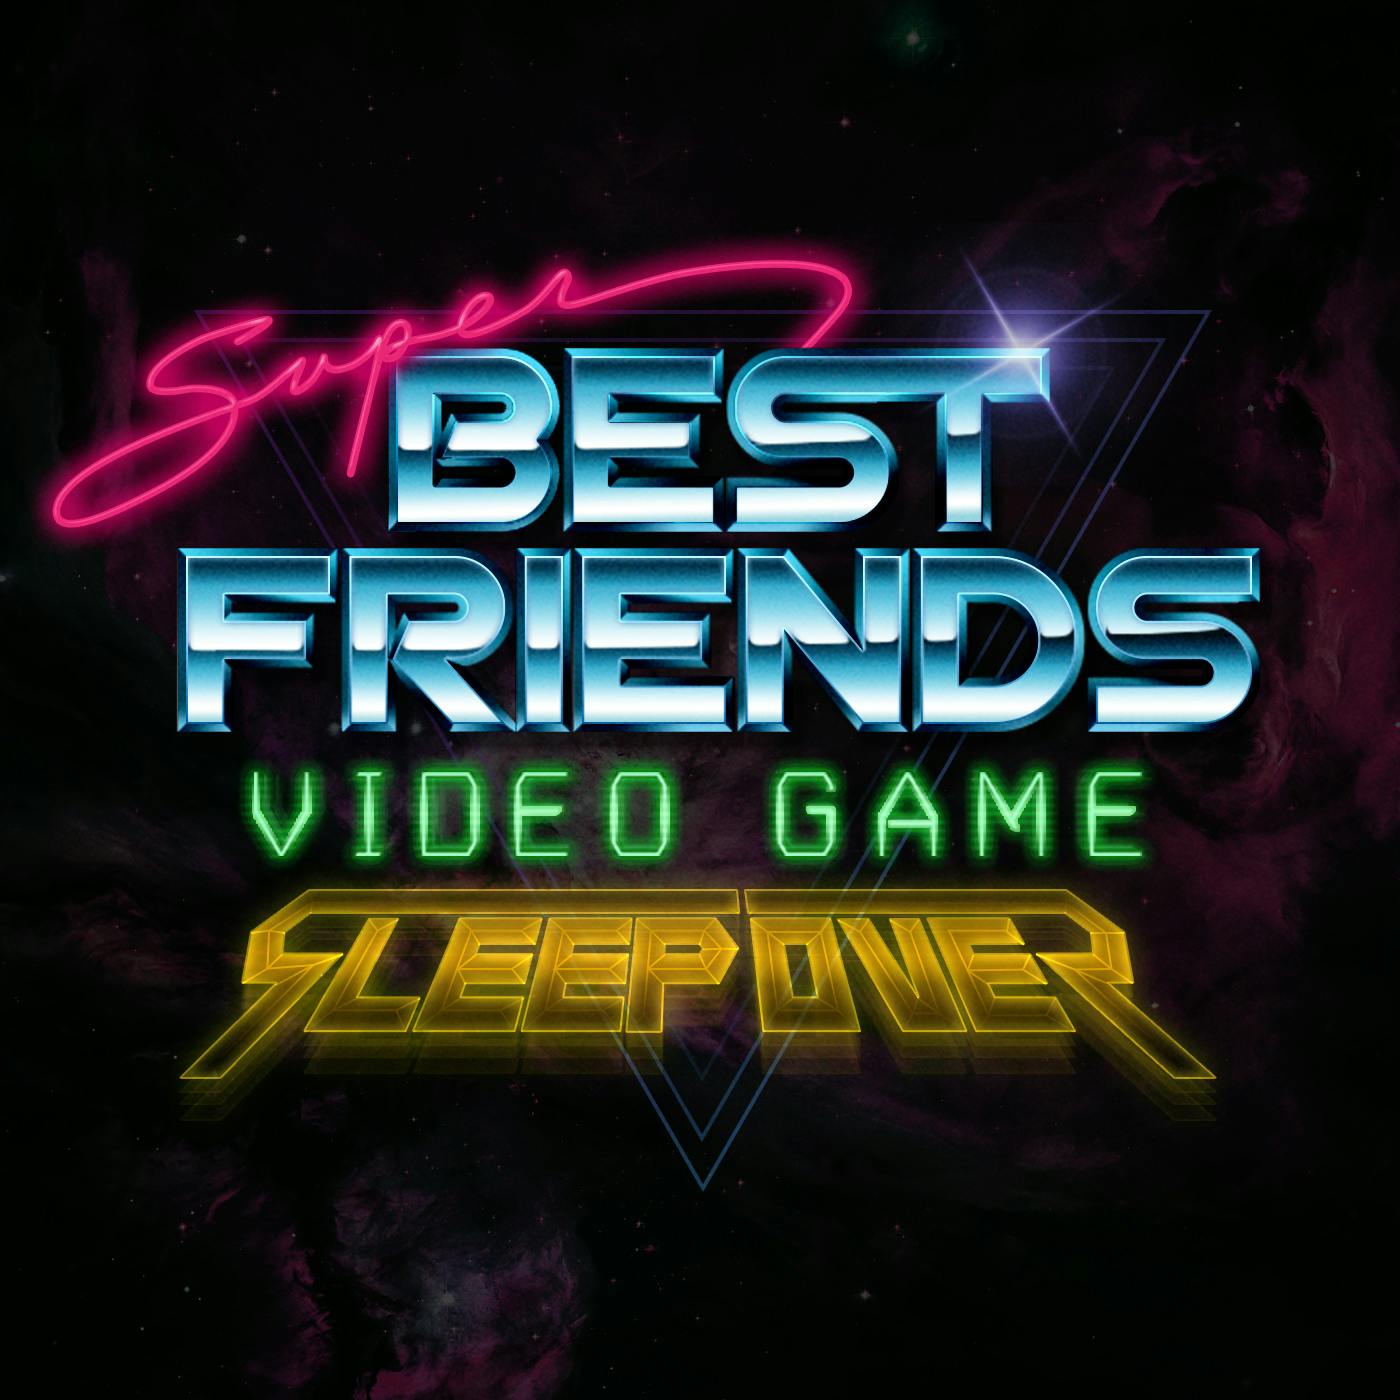 Super Best Friends Video Game Sleepover - Episode 41